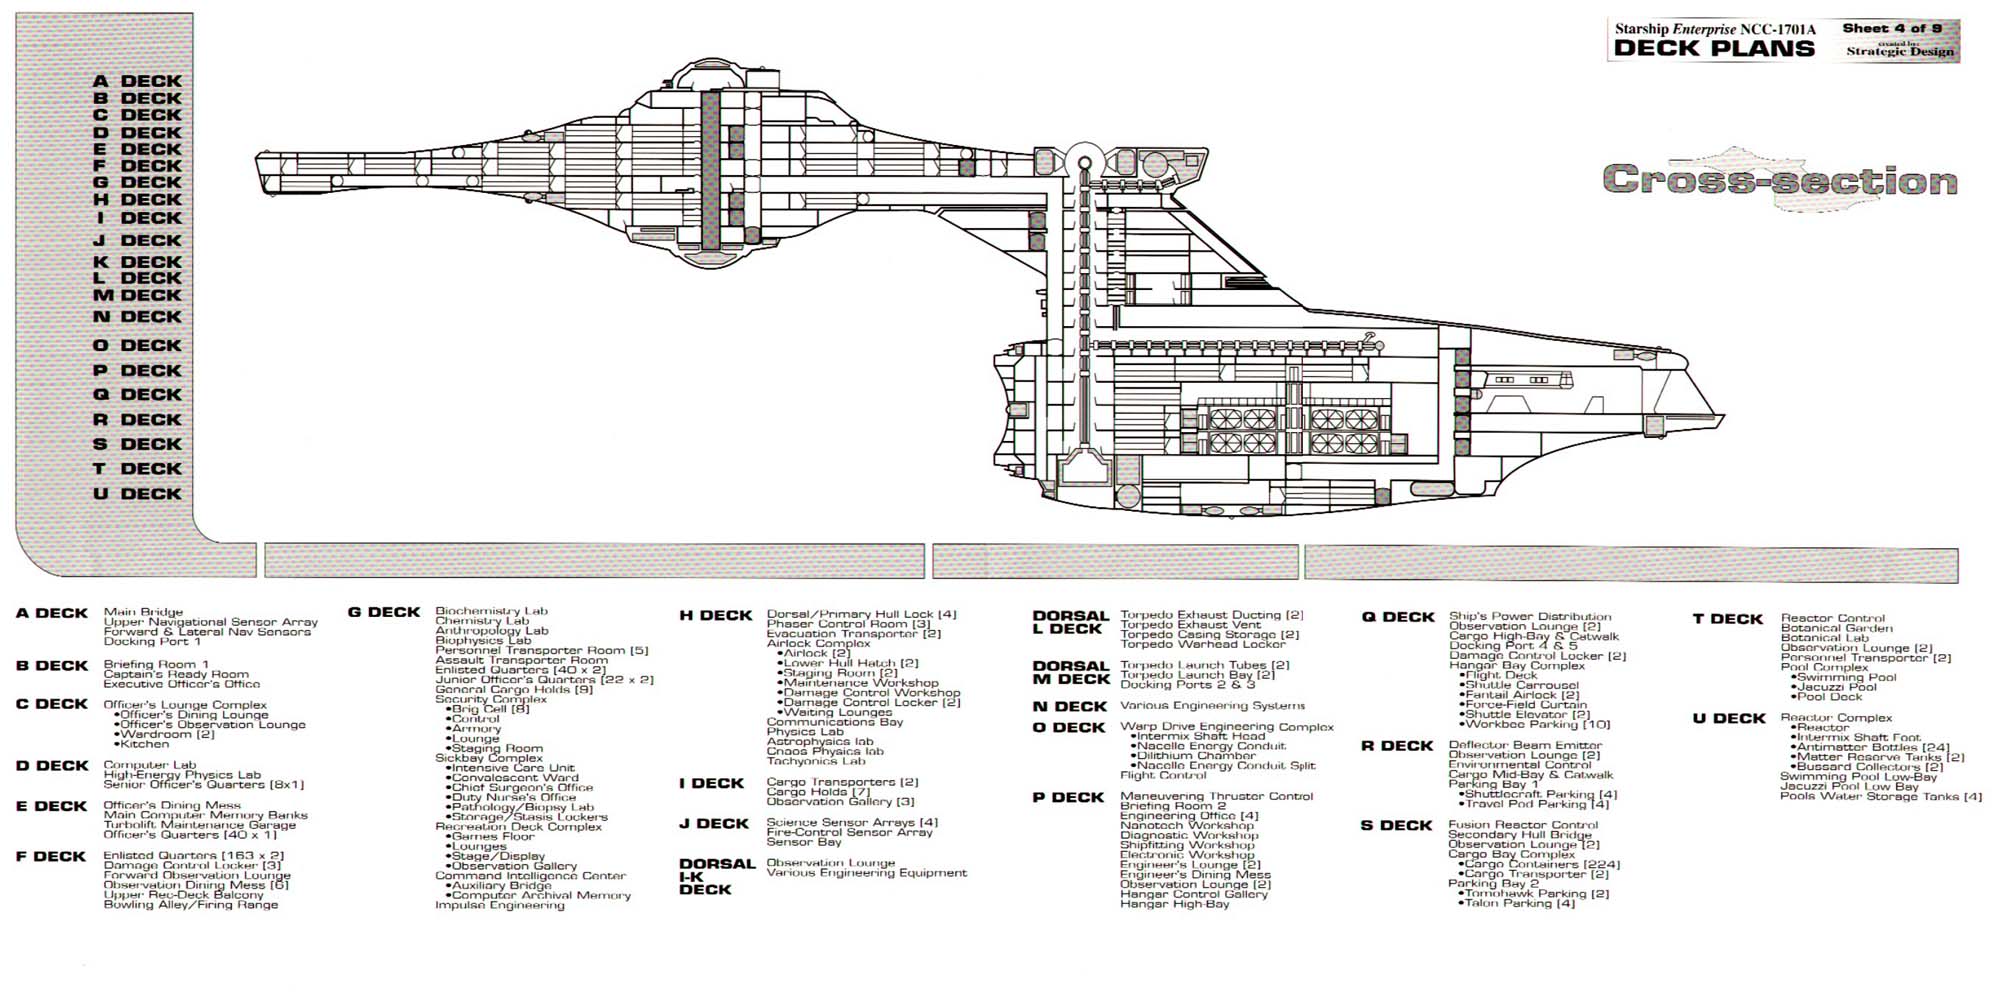 enterprise-deck-plans-sheet-4.jpg